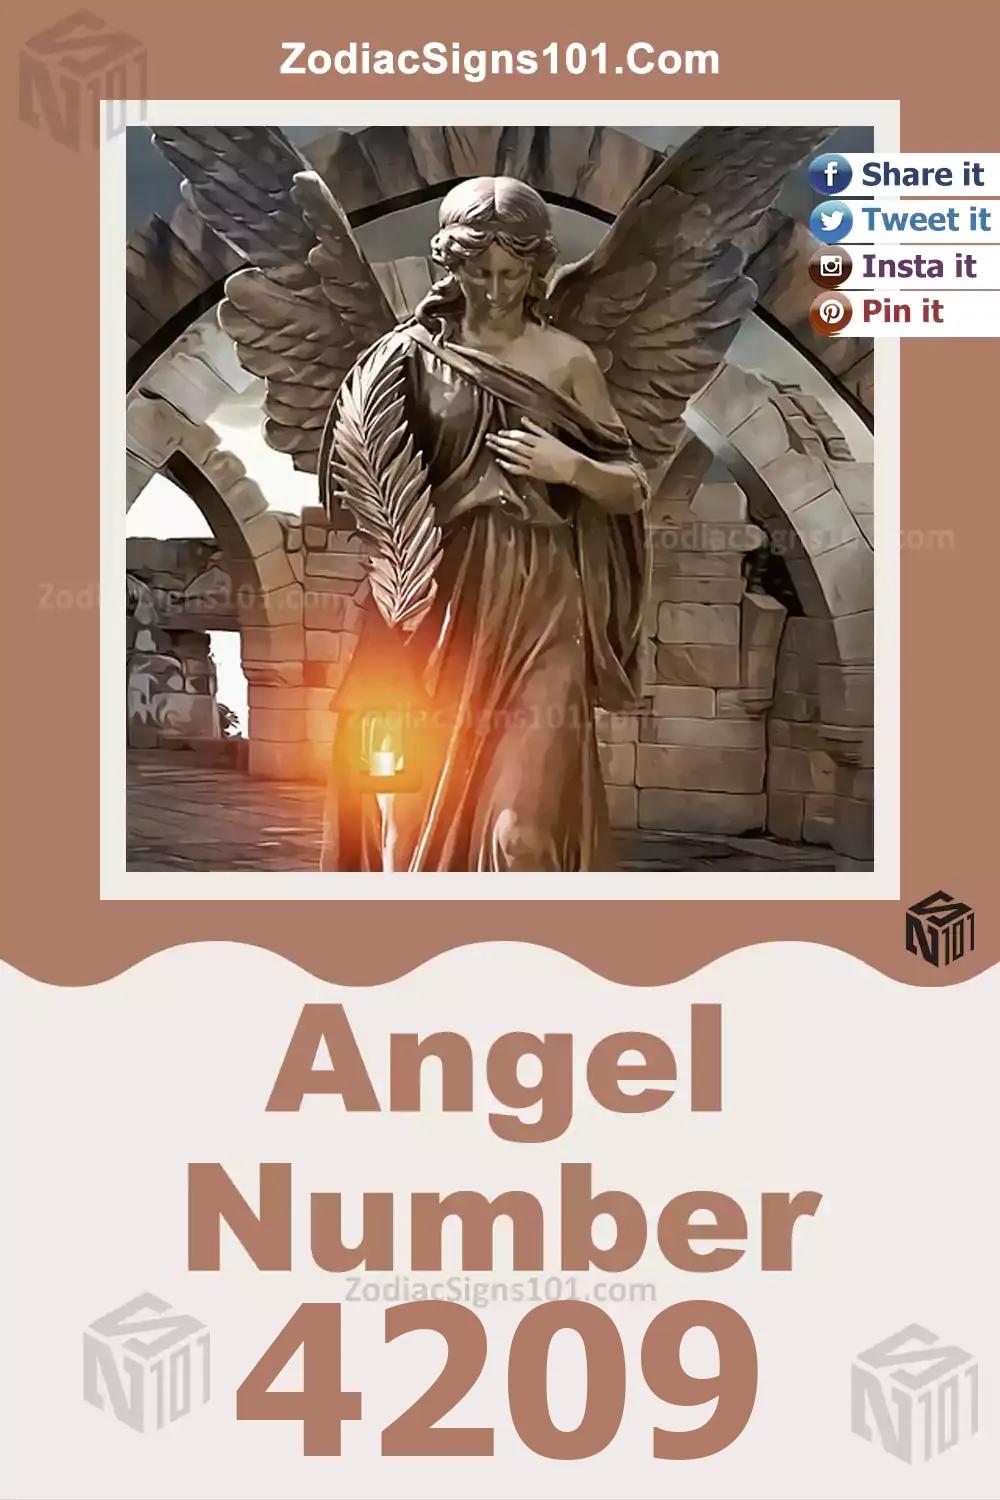 4209-Angel-Number-Meaning.jpg